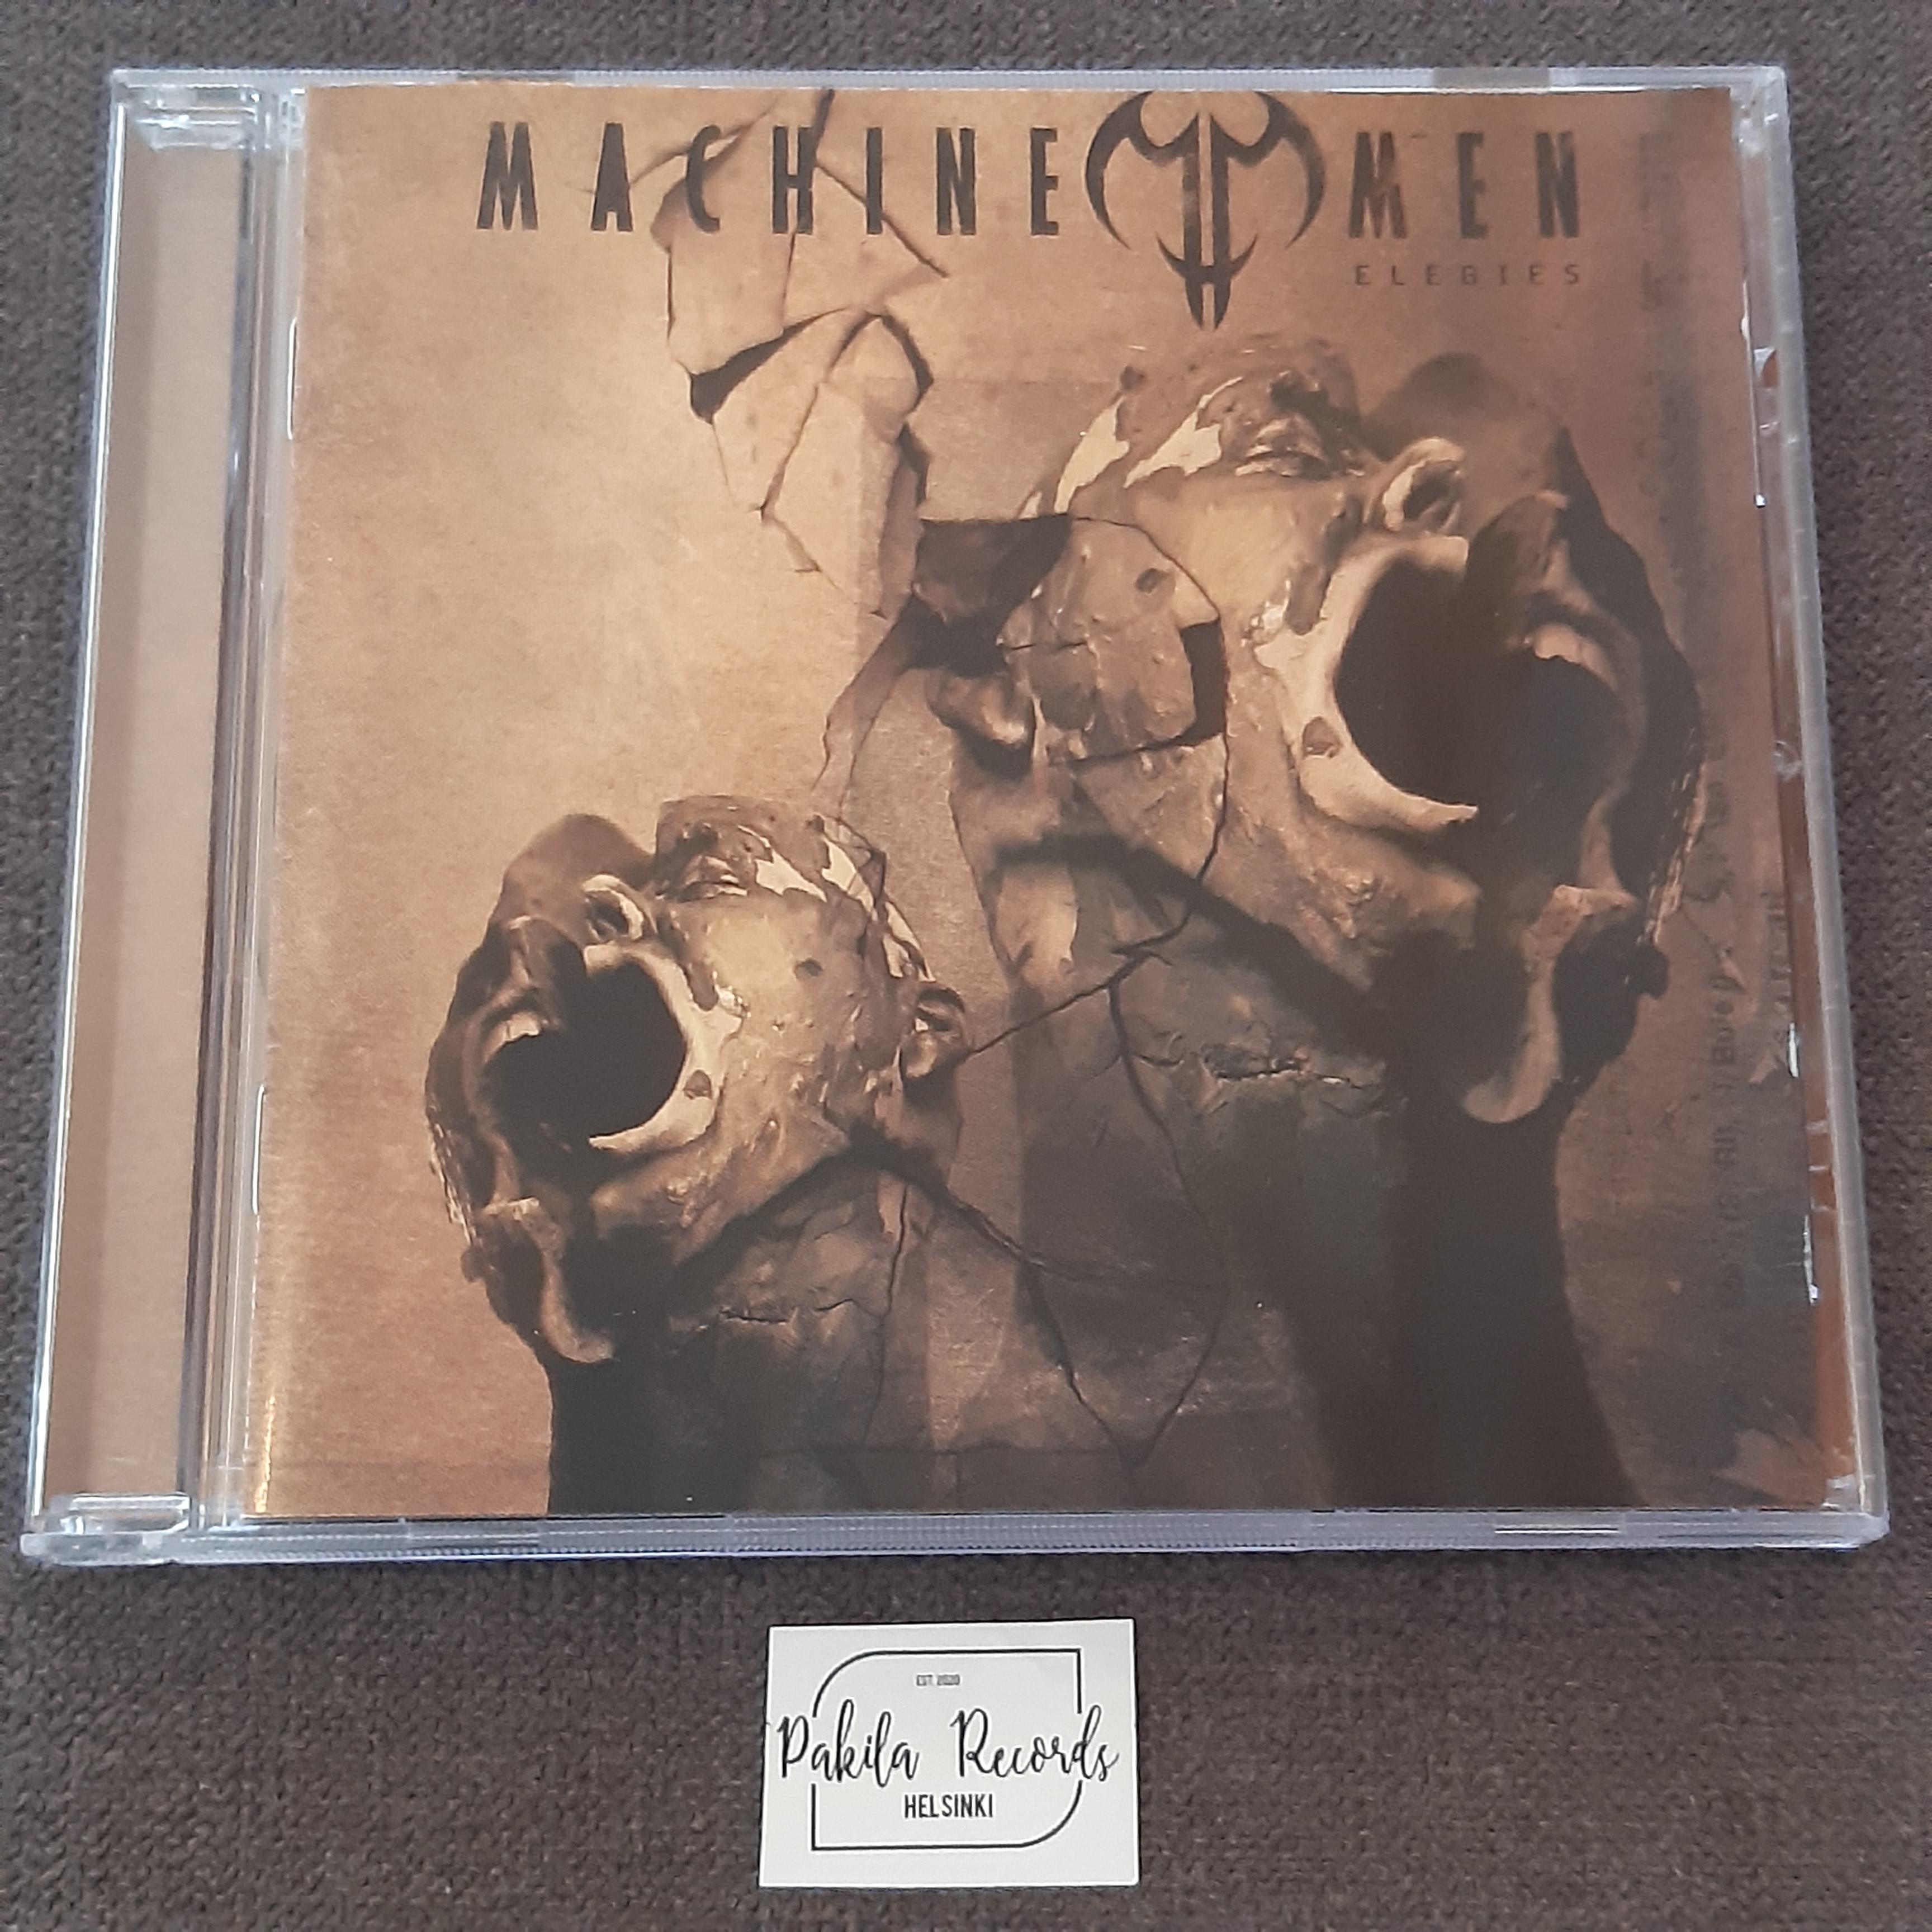 Machine Men - Elegies - CD (käytetty)